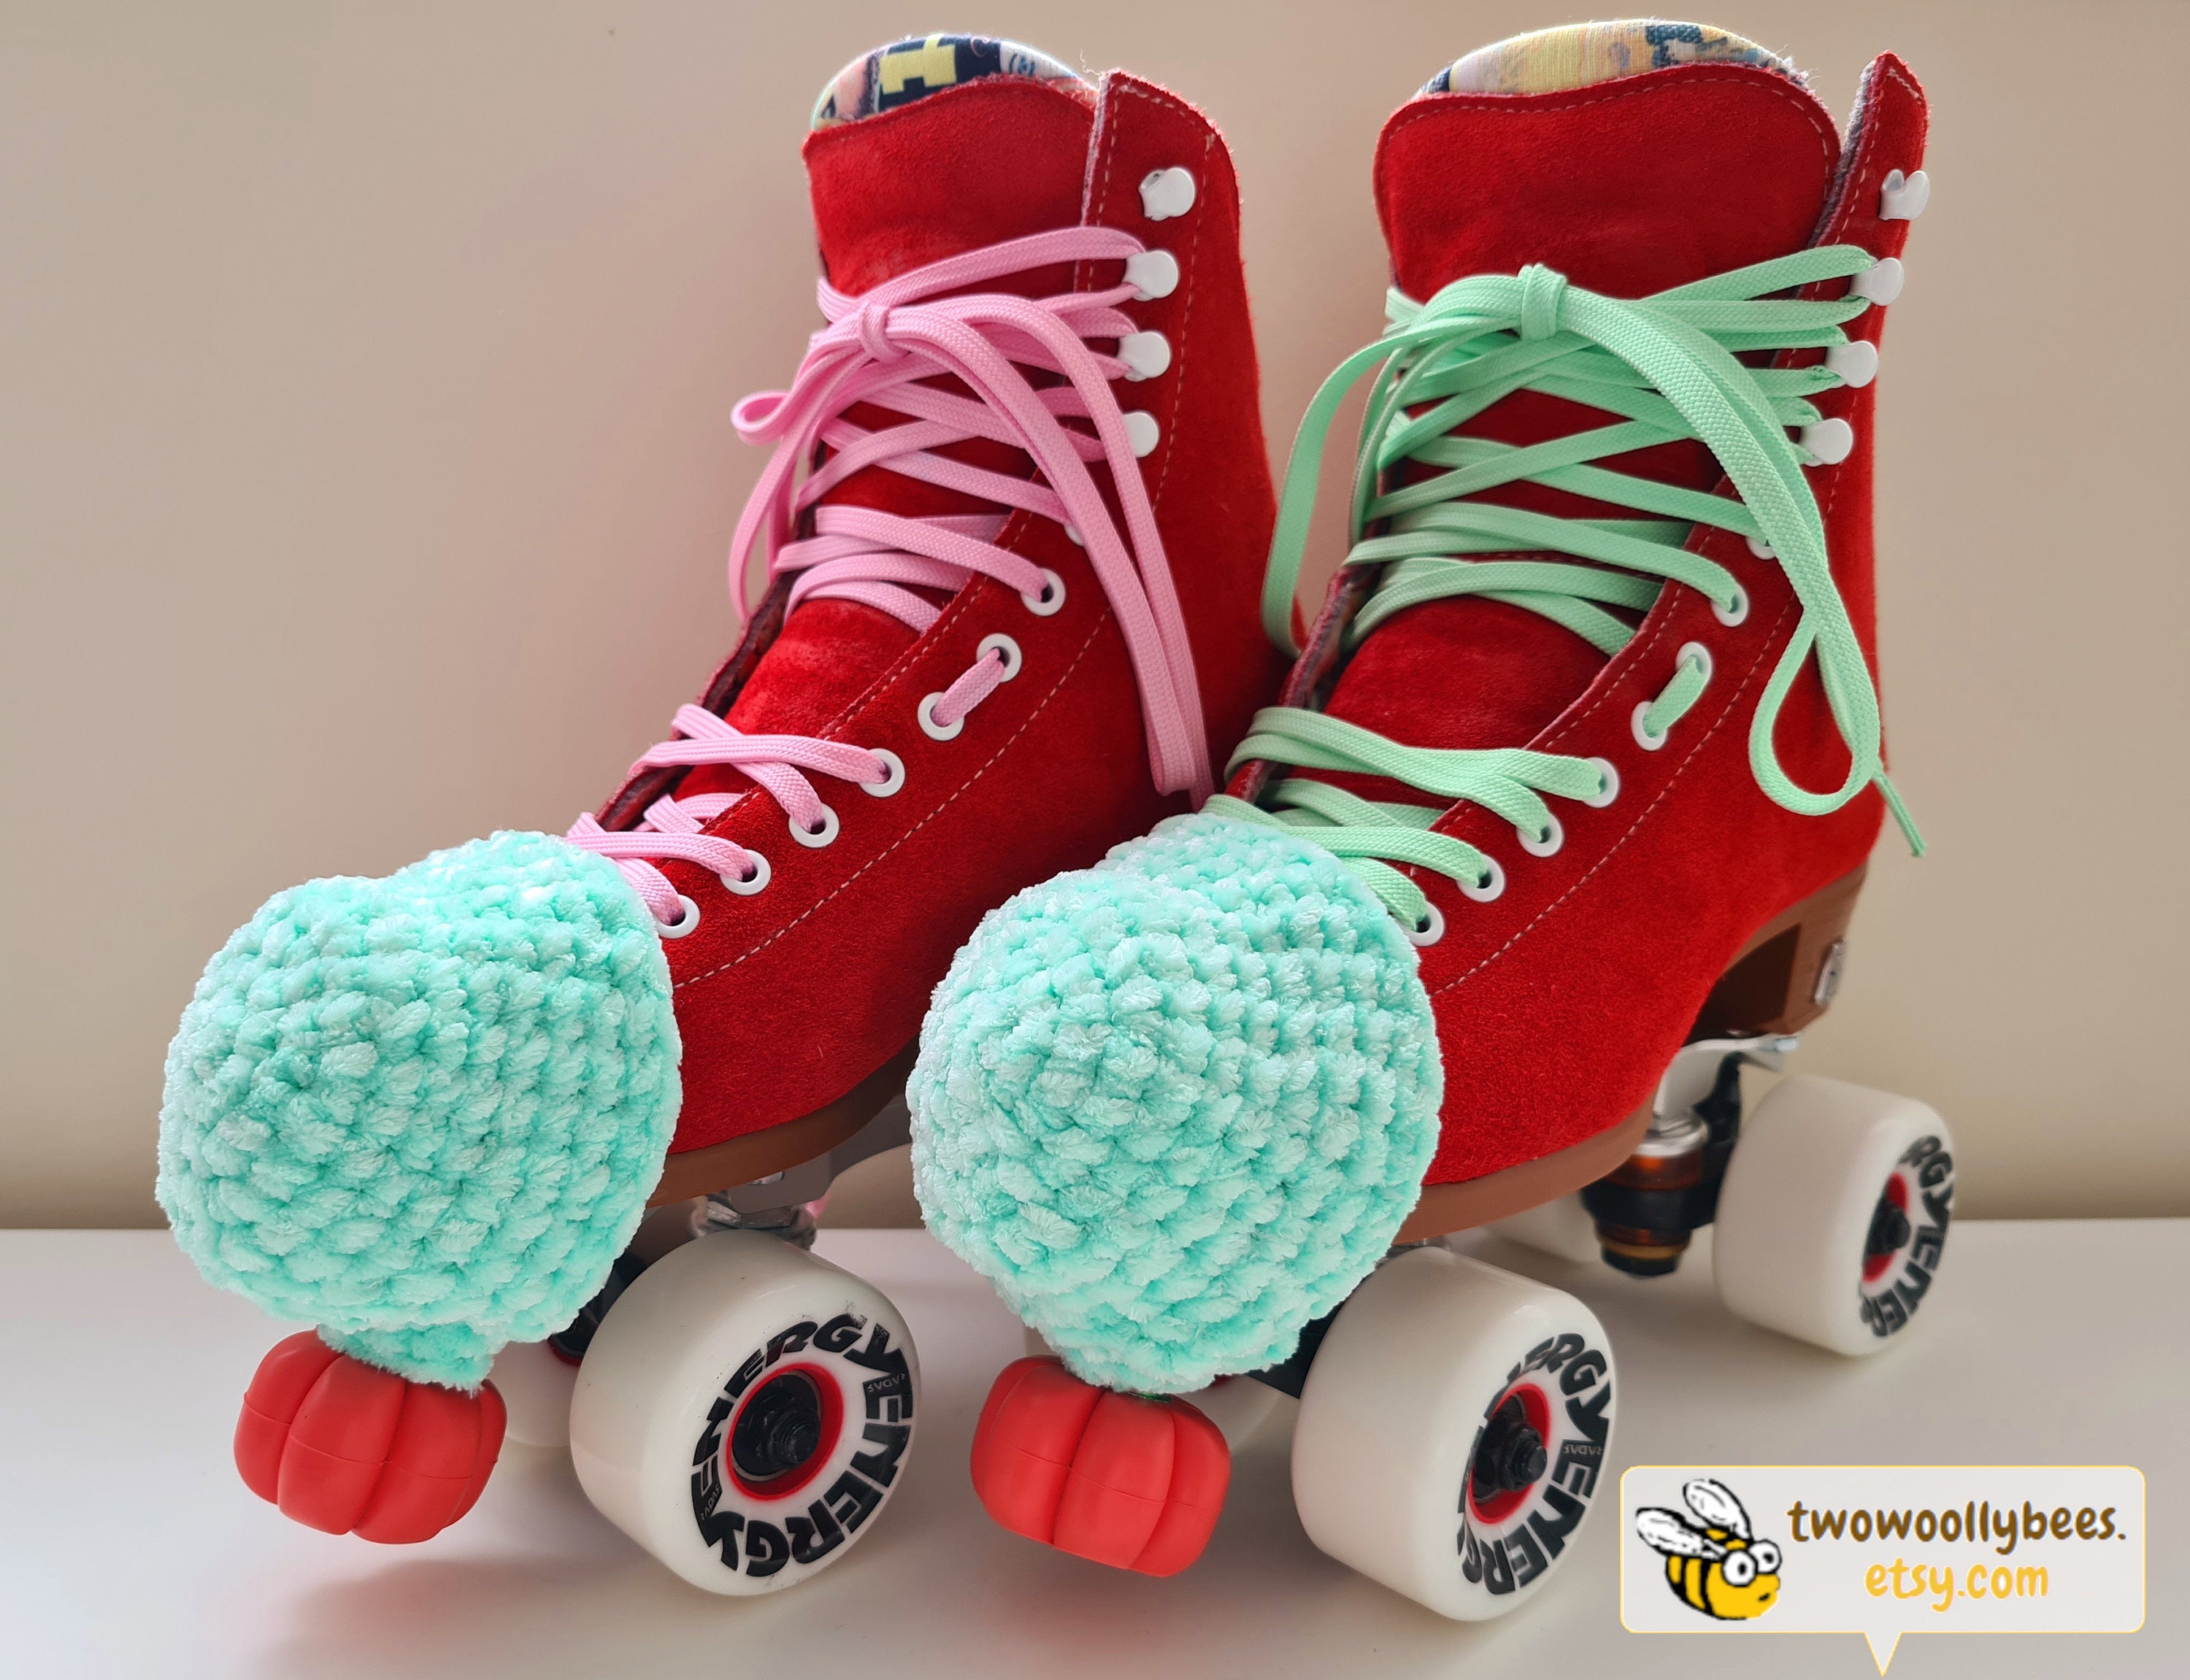 Fluffy Roller Skate Toe Guards Roller Skating Accessories | Etsy Hong Kong